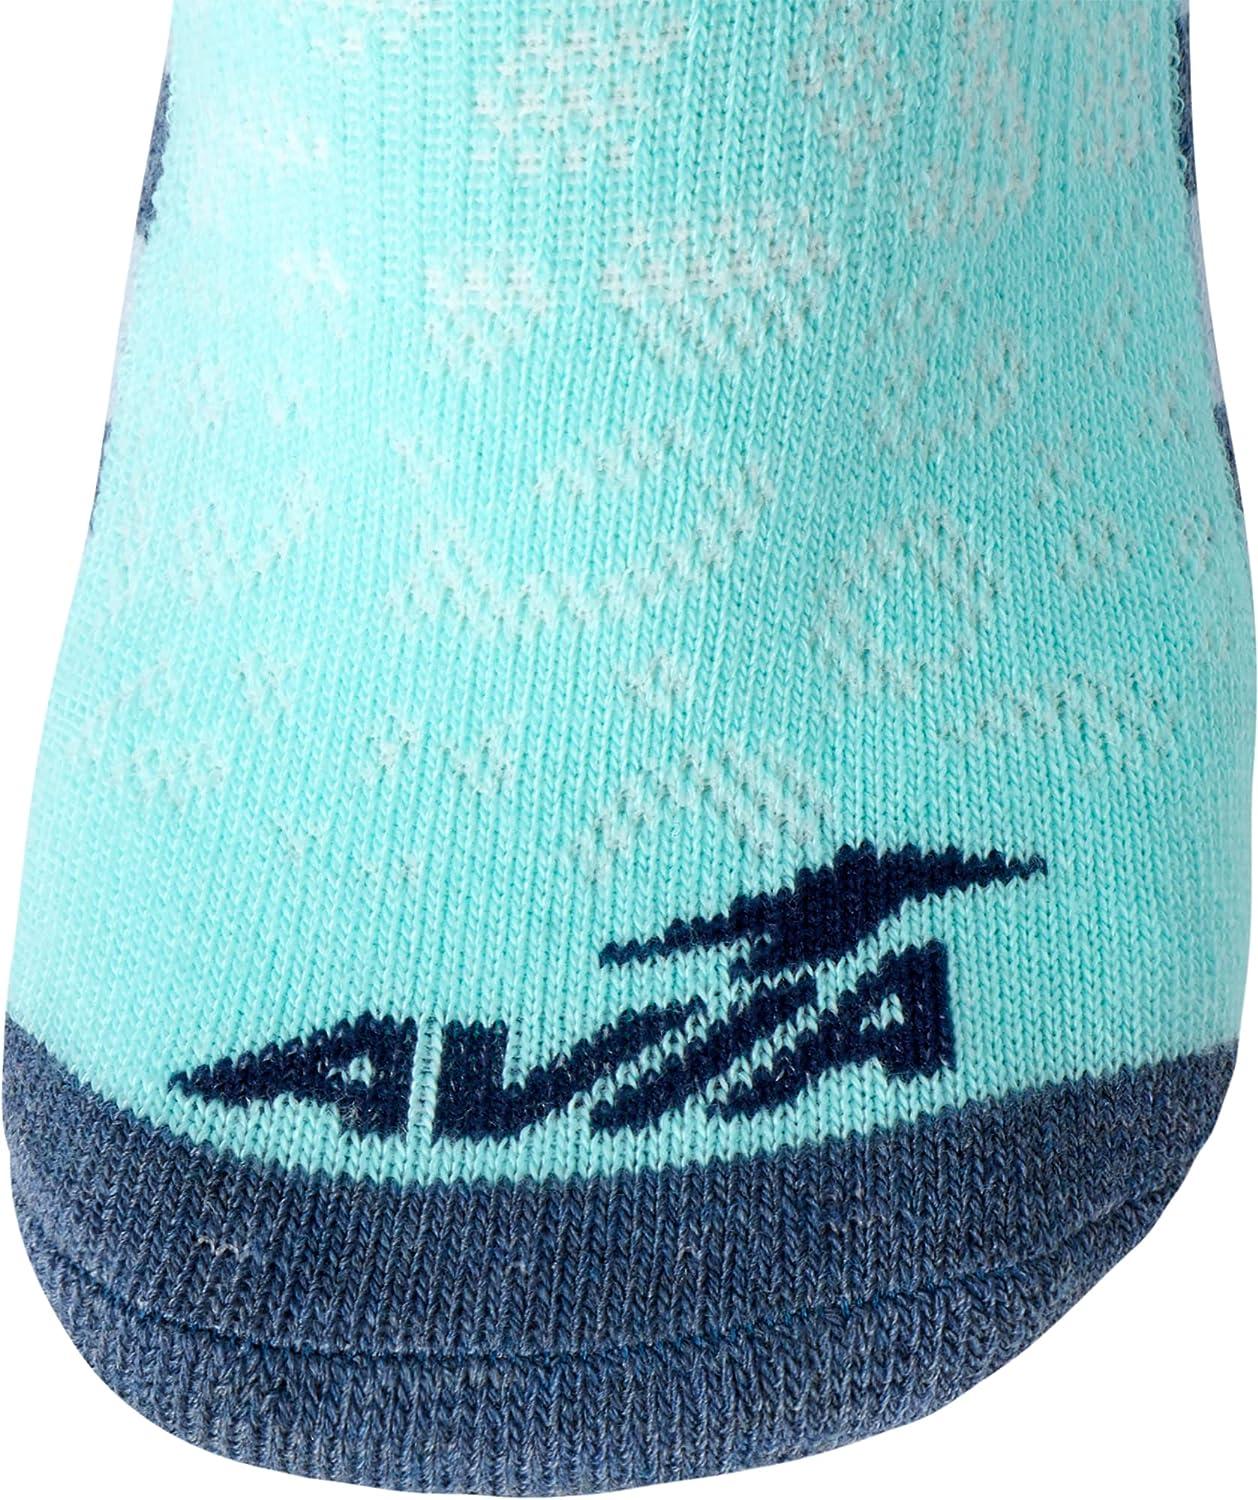 Avia Girls' Socks - 20 Pack Performance Cushion Low Cut Socks